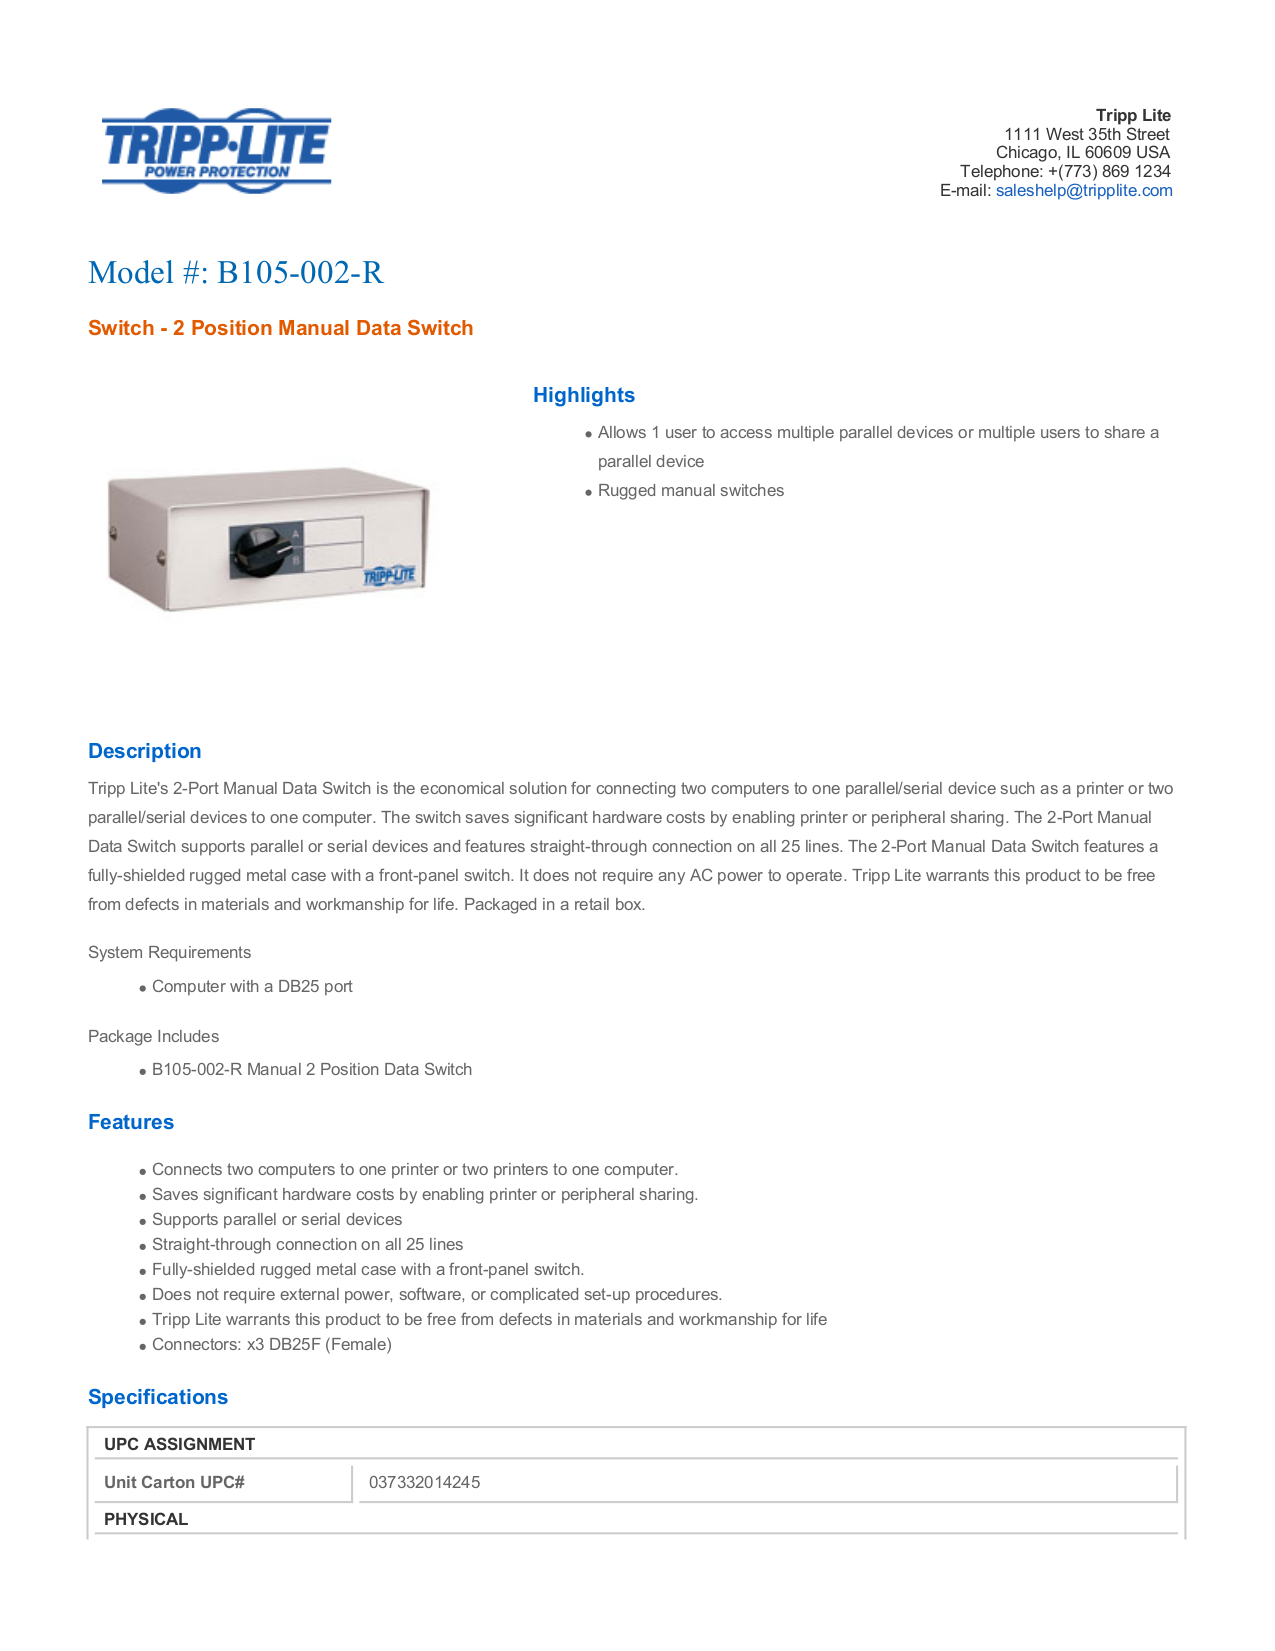 pdf for Tripp Switch B170-002-R manual